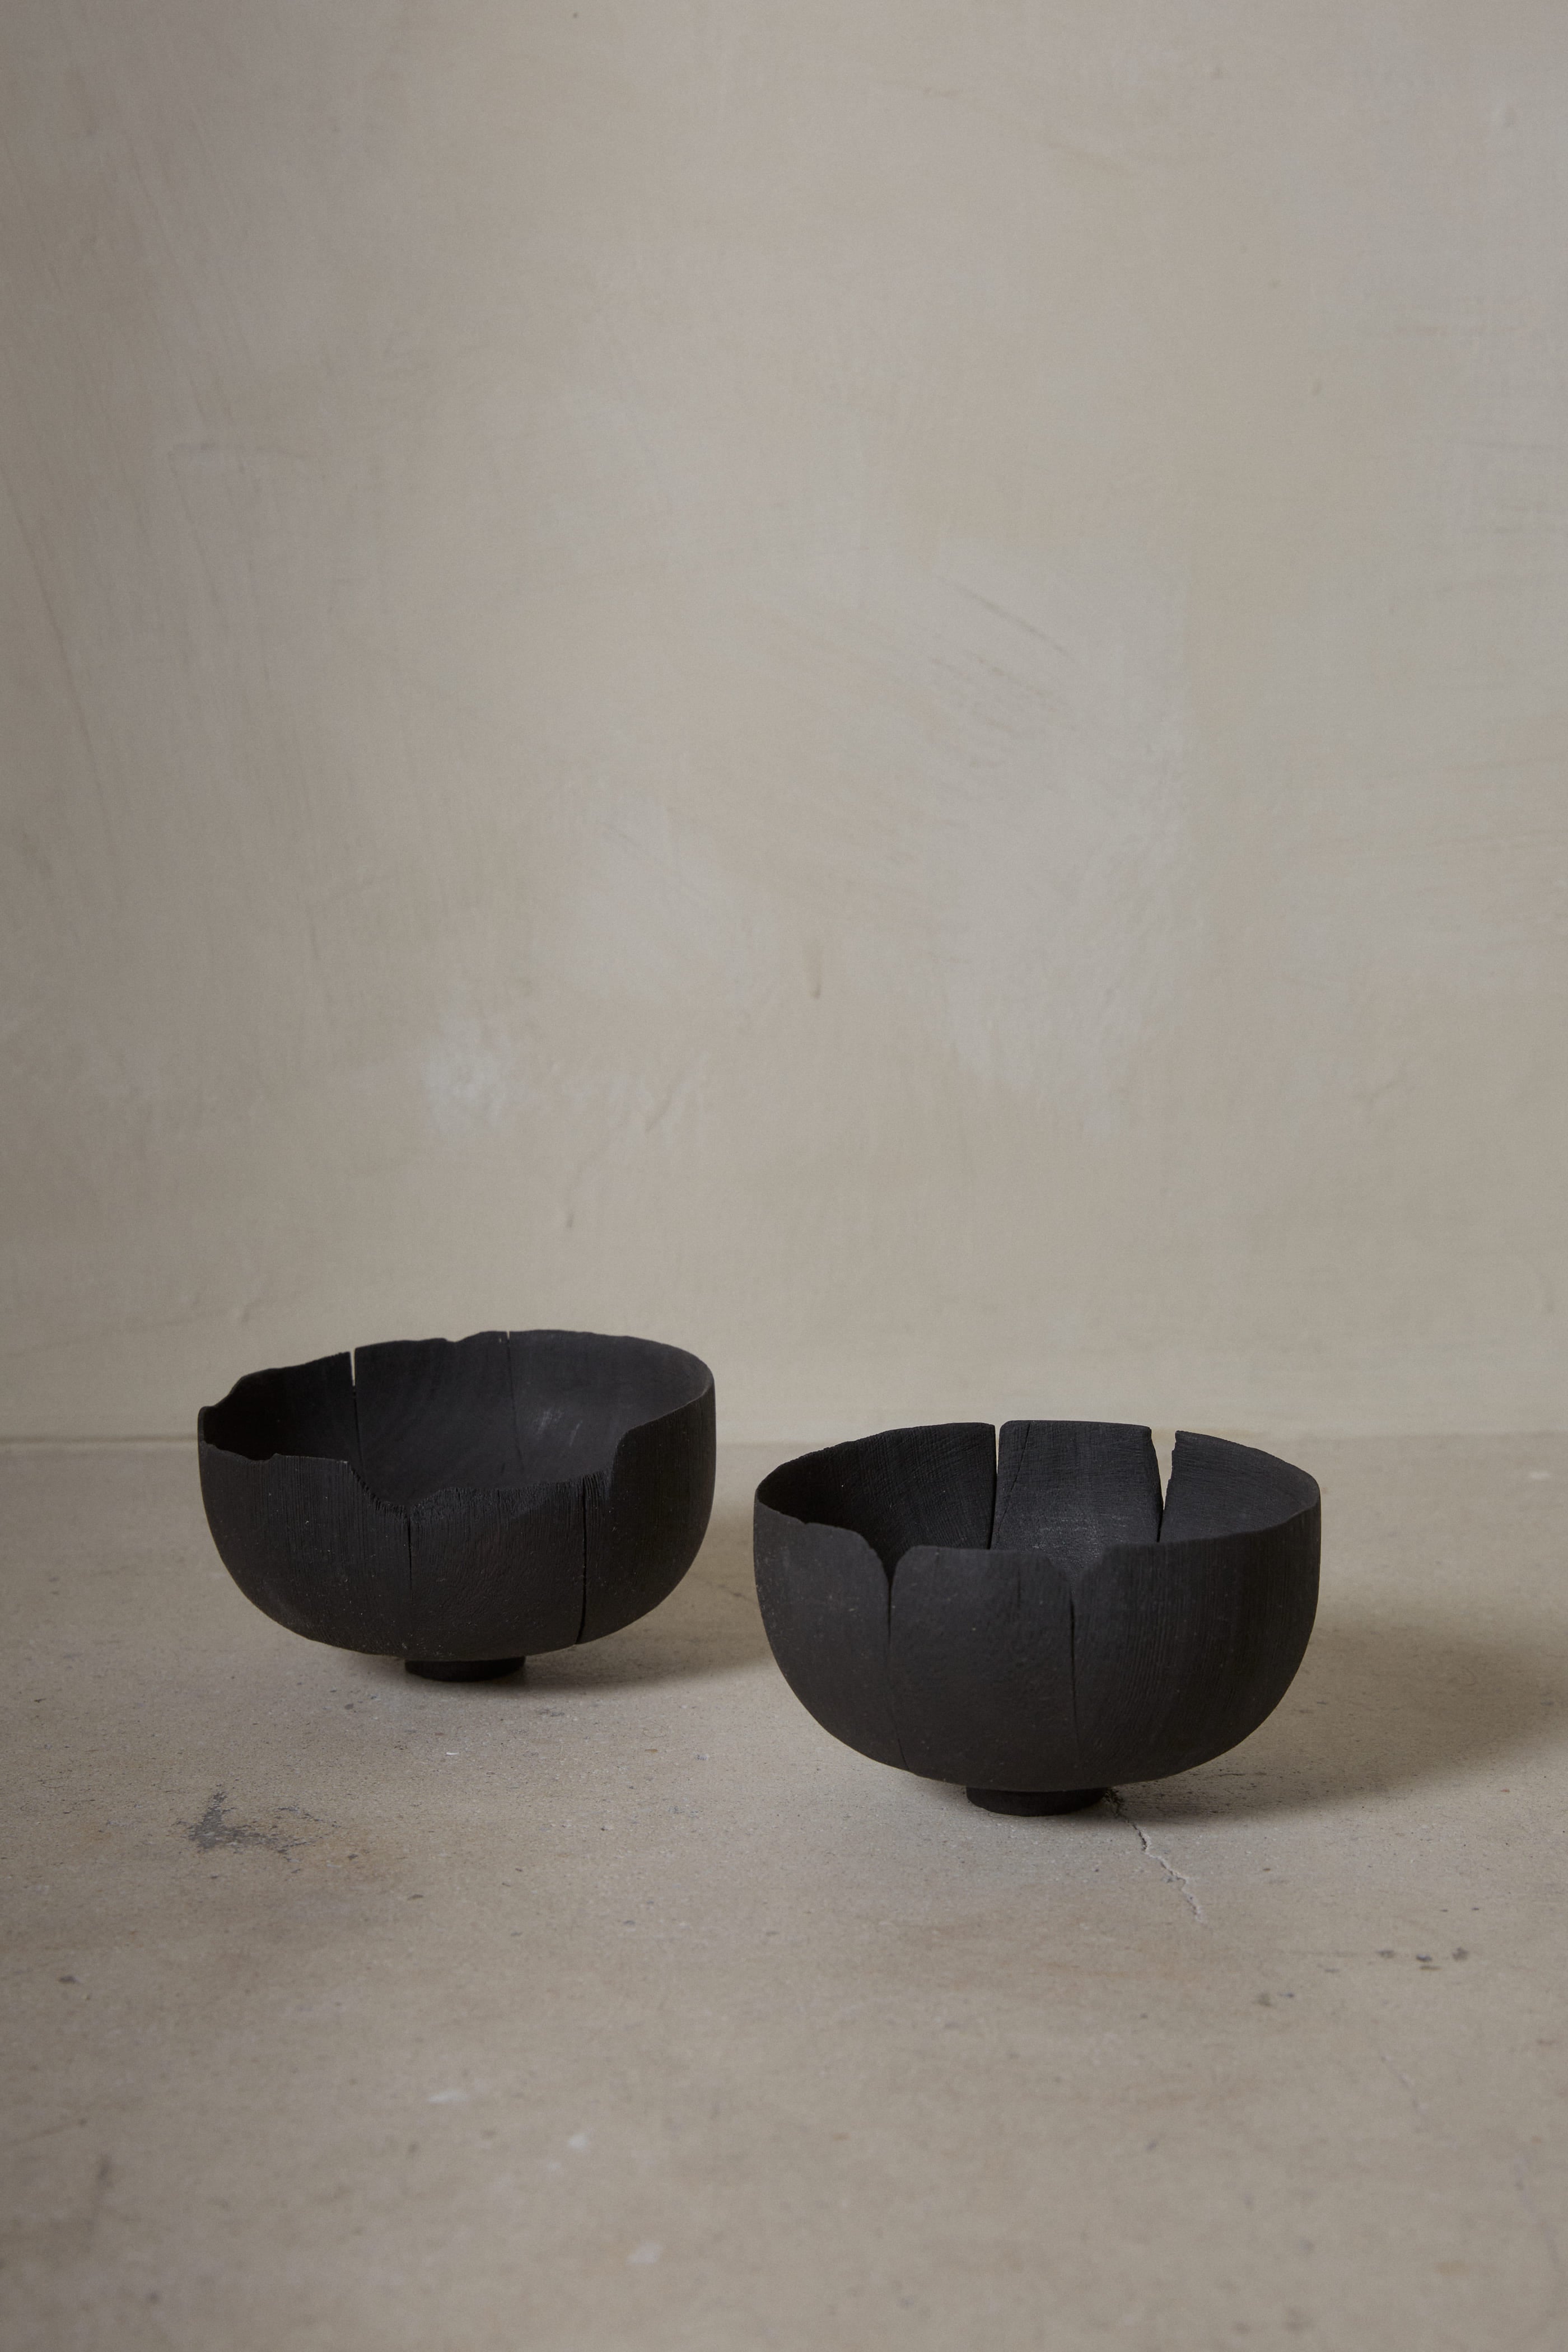 Pair of black Yakisugi Bowls from CARMWORKS.